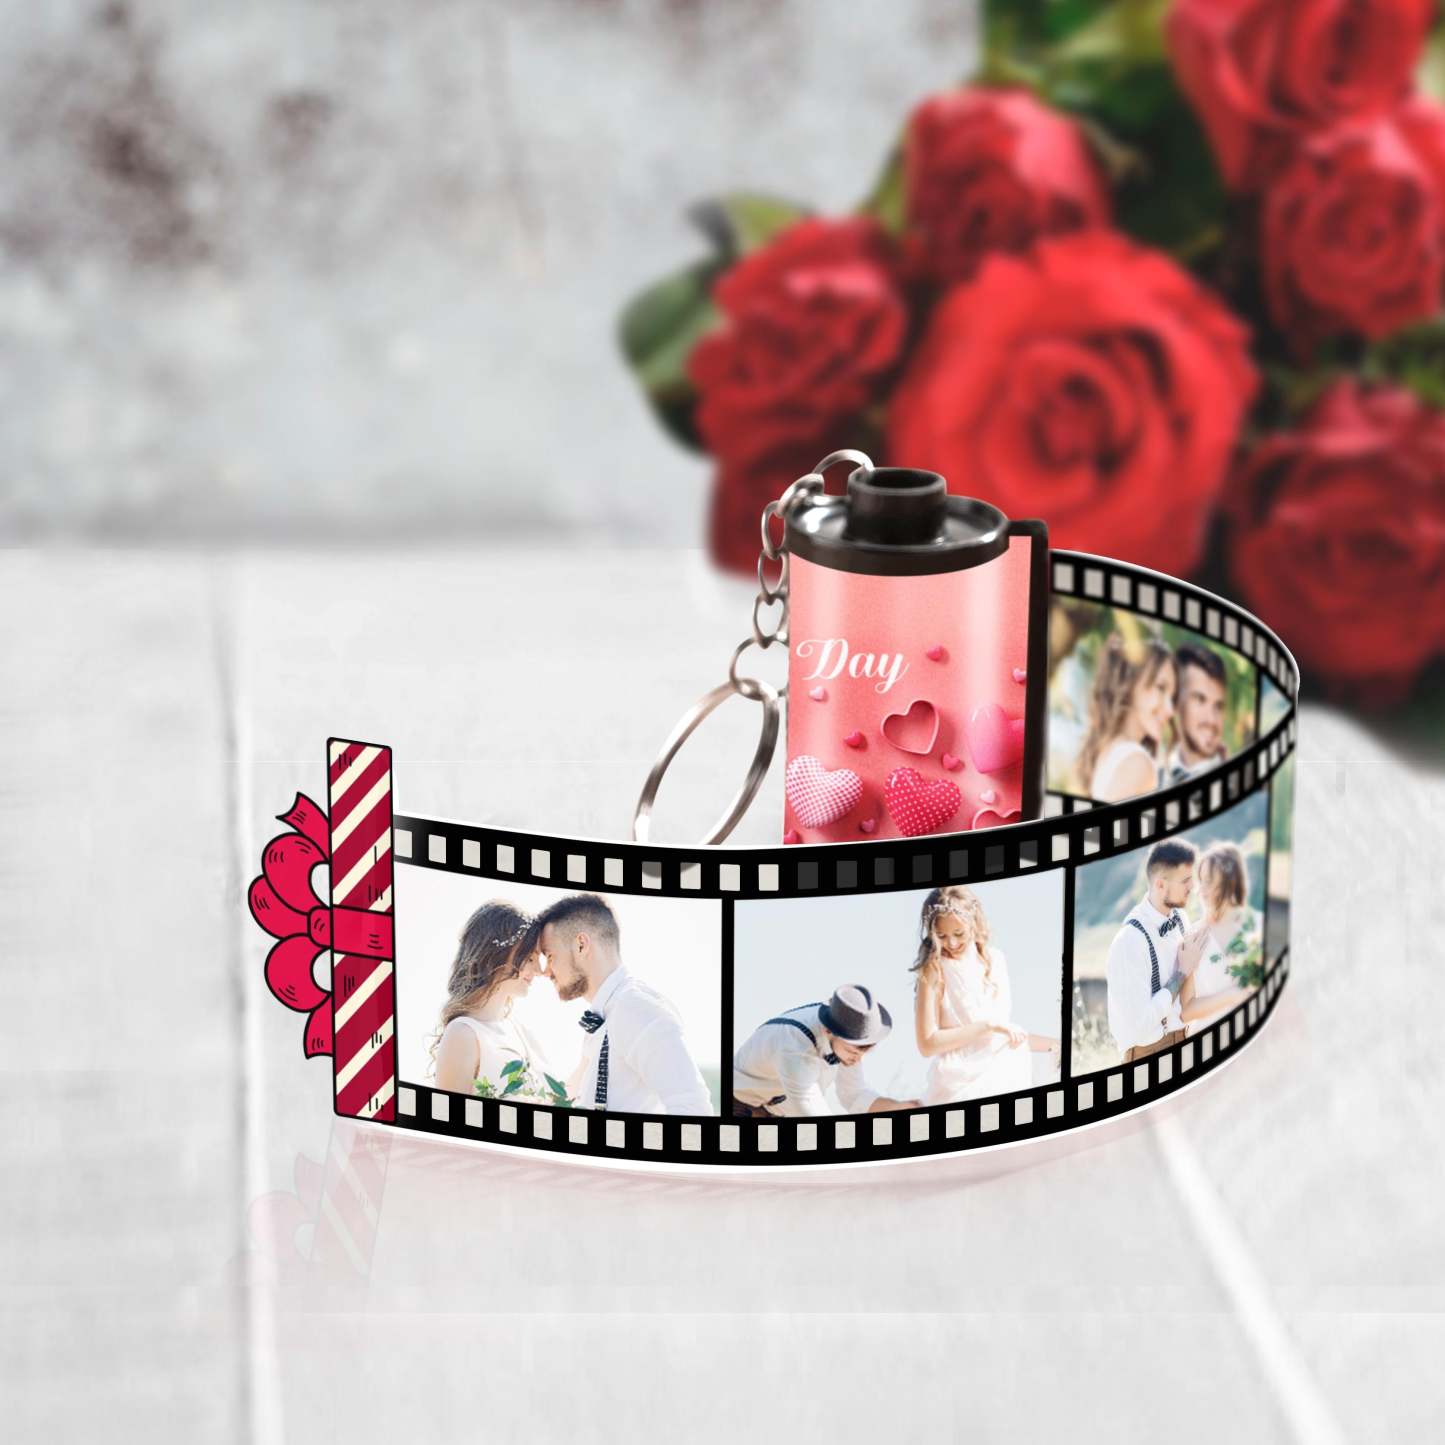 Custom Photo Film Roll Keychain Gift Box Decor Camera Keychain Valentine's Day Gifts For Couples - auphotoblanket